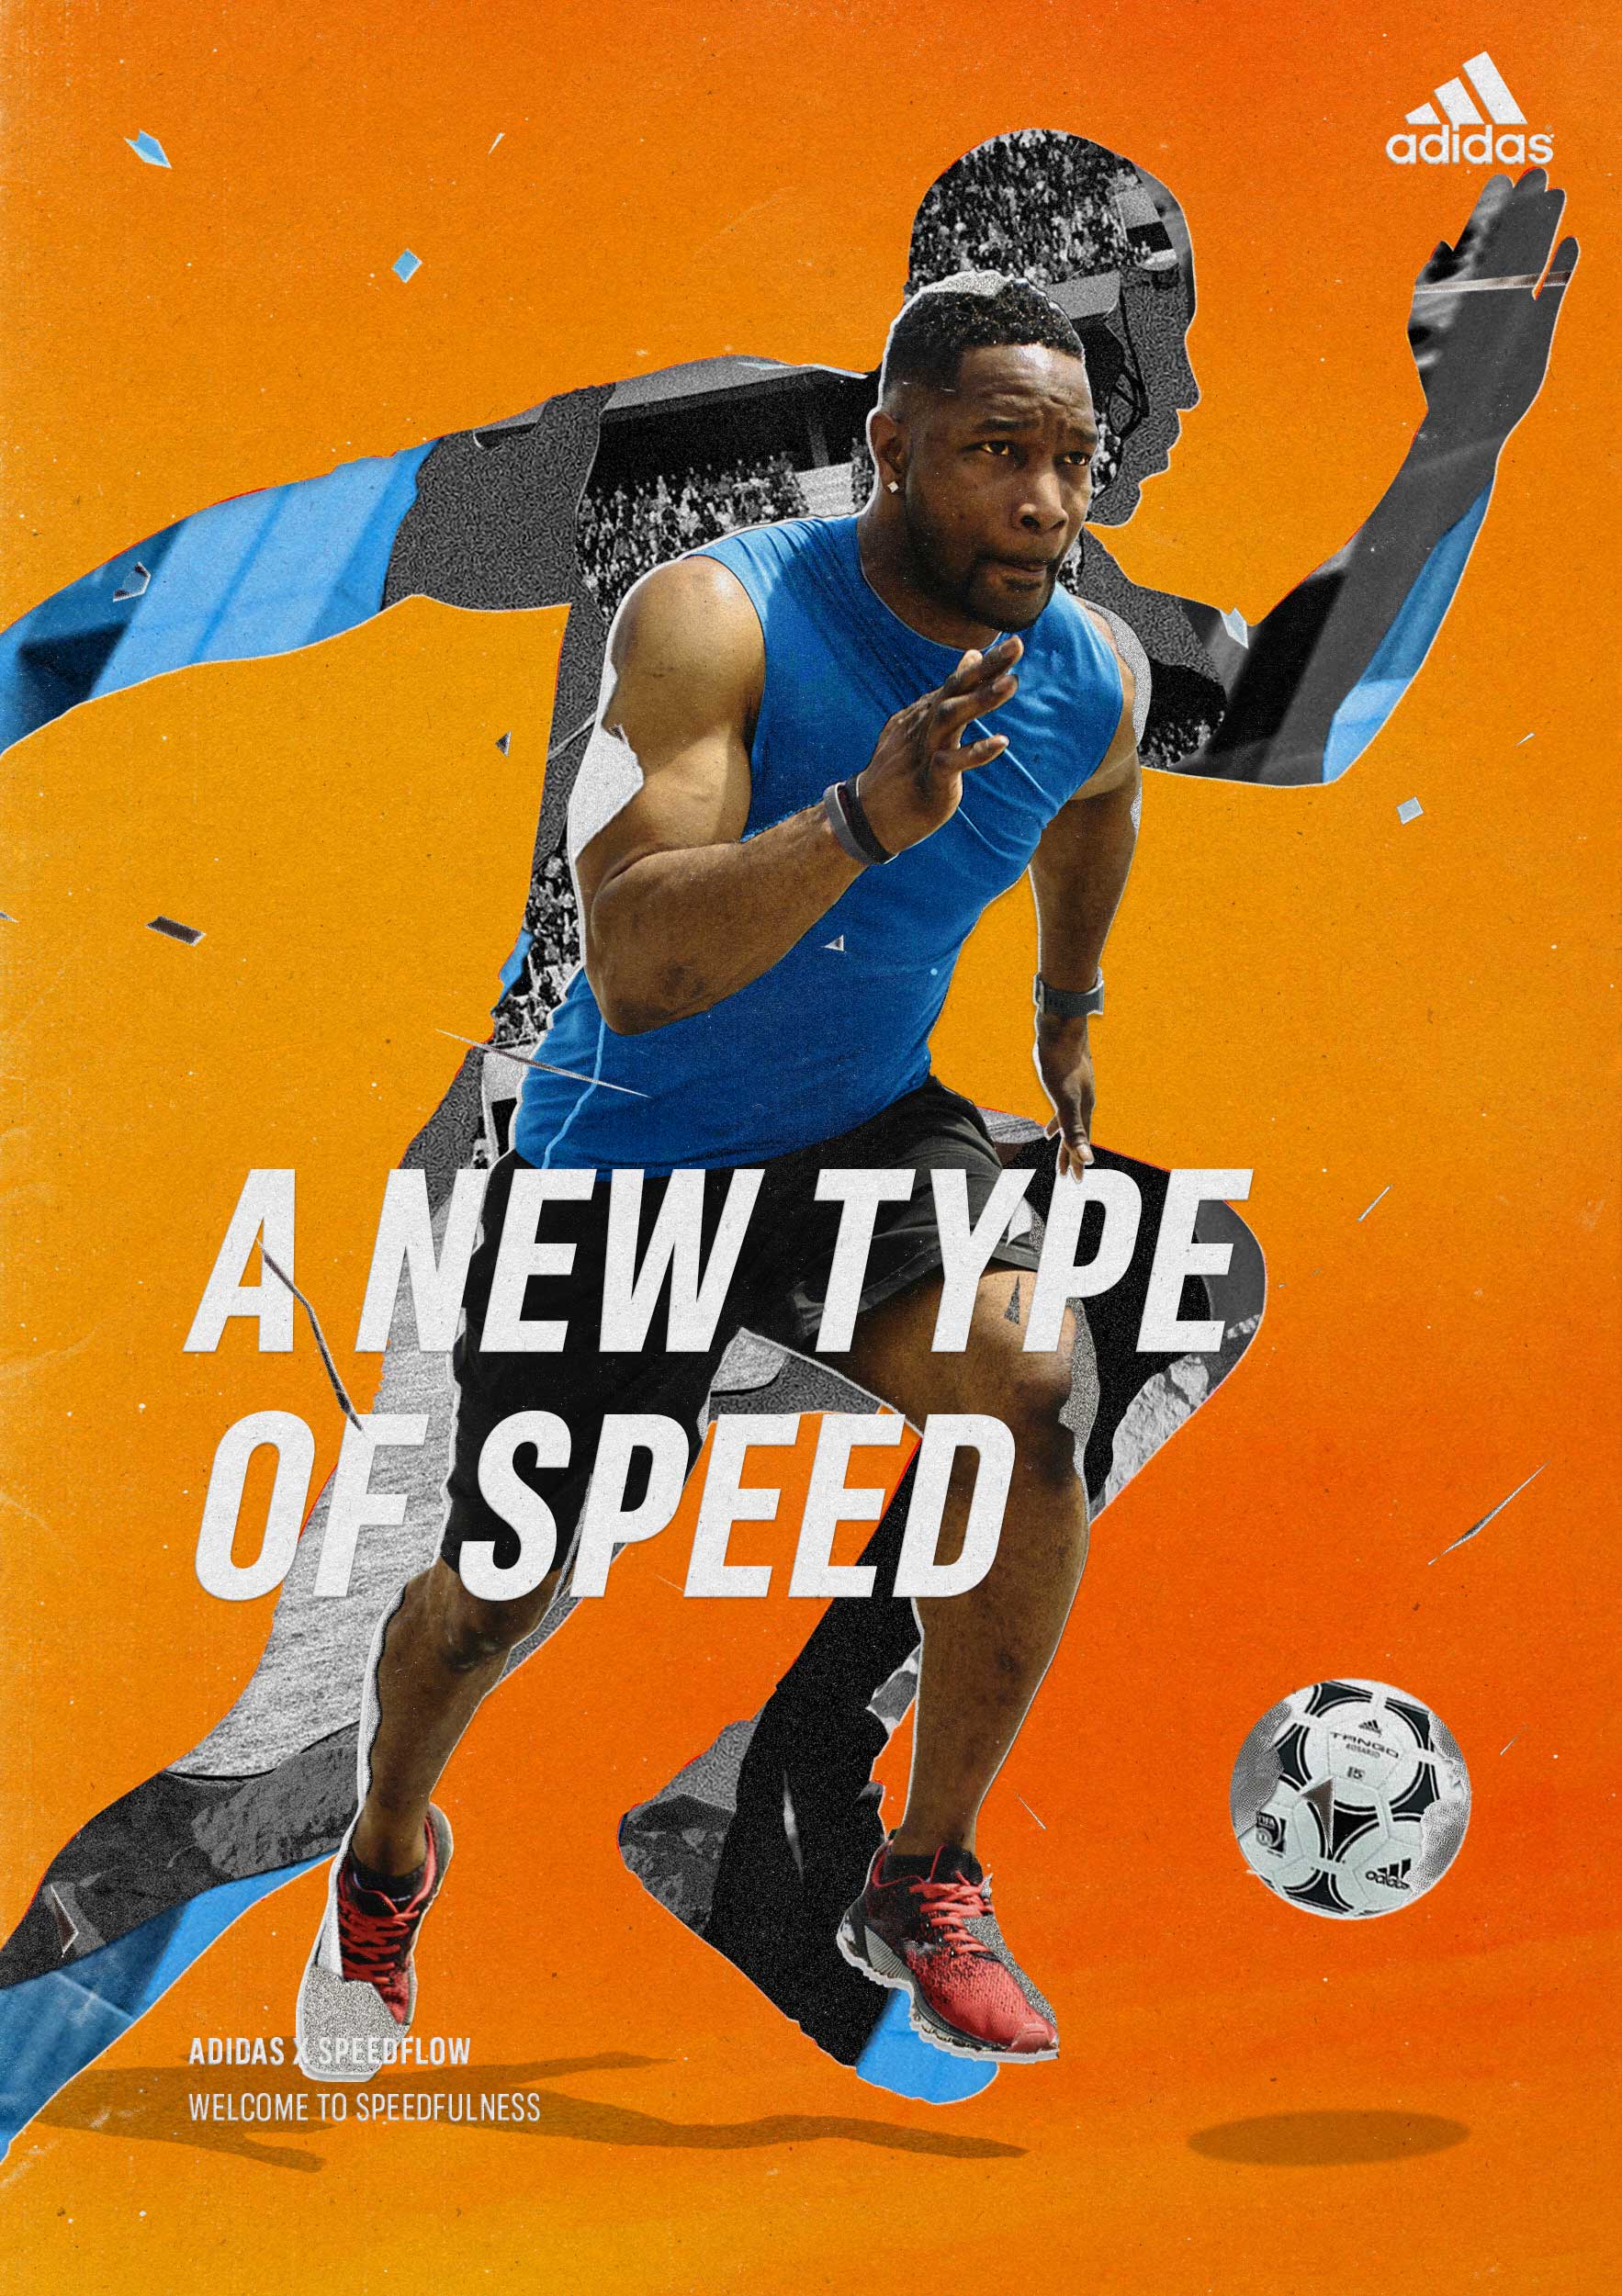 AdidasFootball_Concept_01_Poster_02_FlorianStumpe